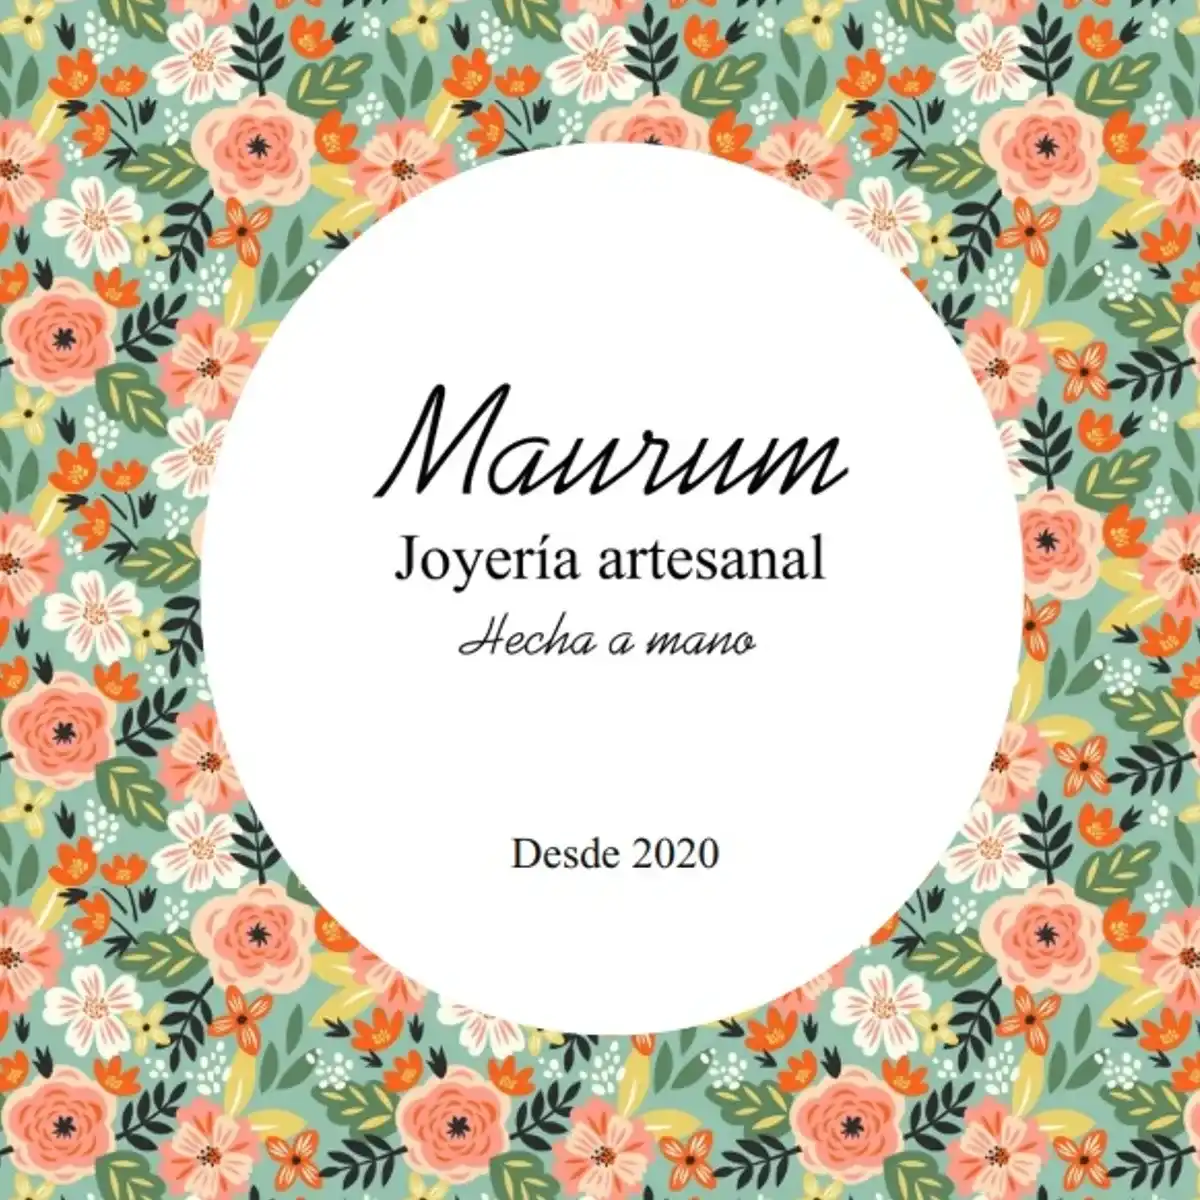 MAURUM Joyería Artesanal